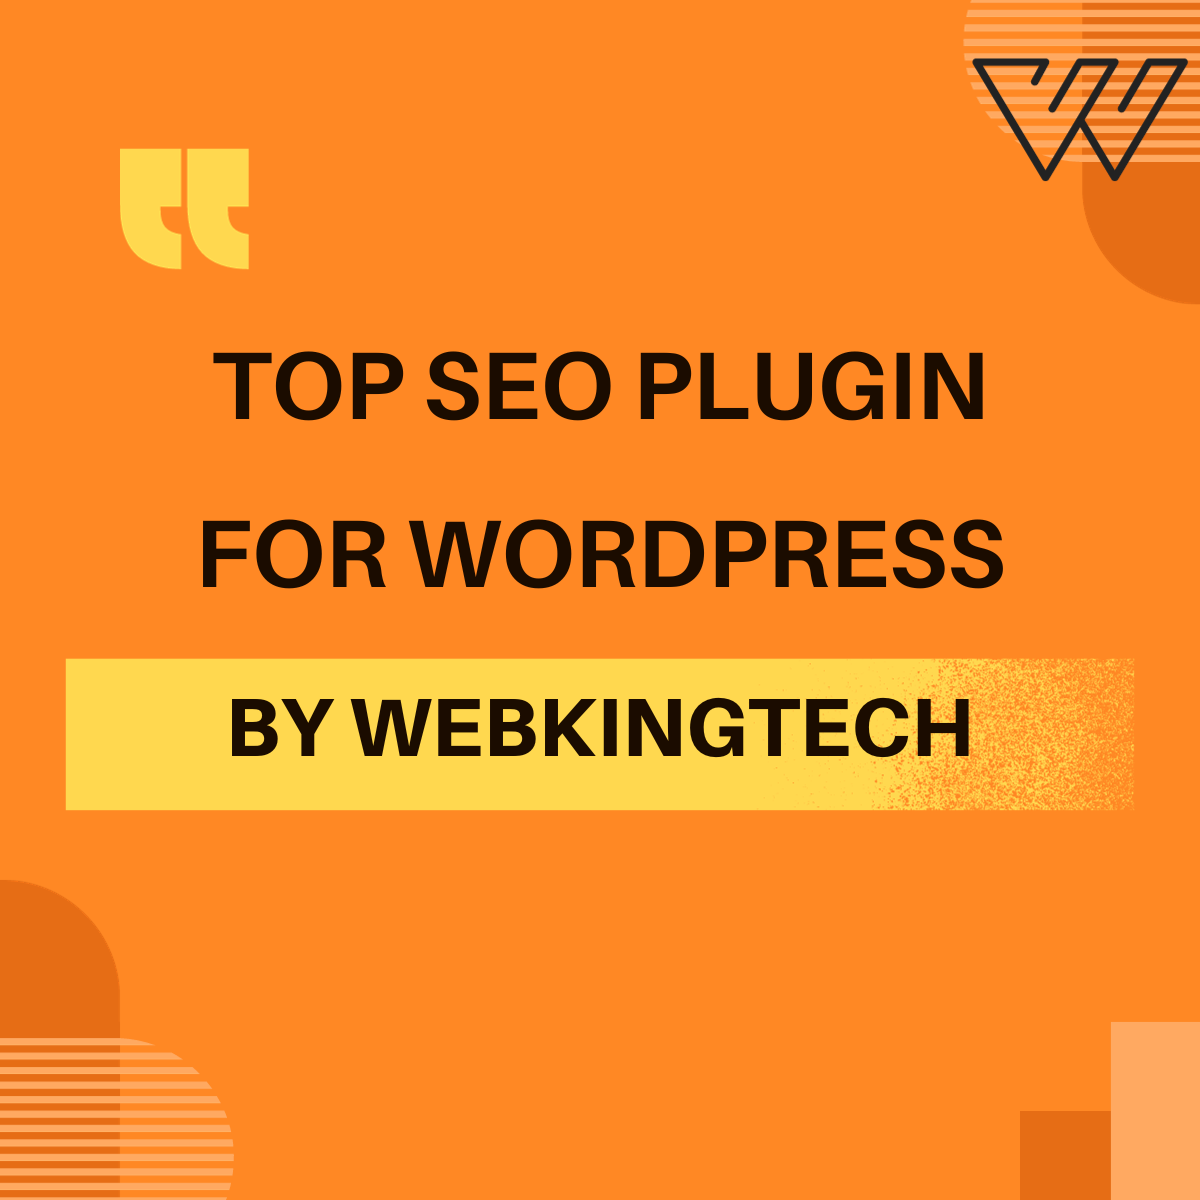 WordPress SEO Plugins Every Website Should Have